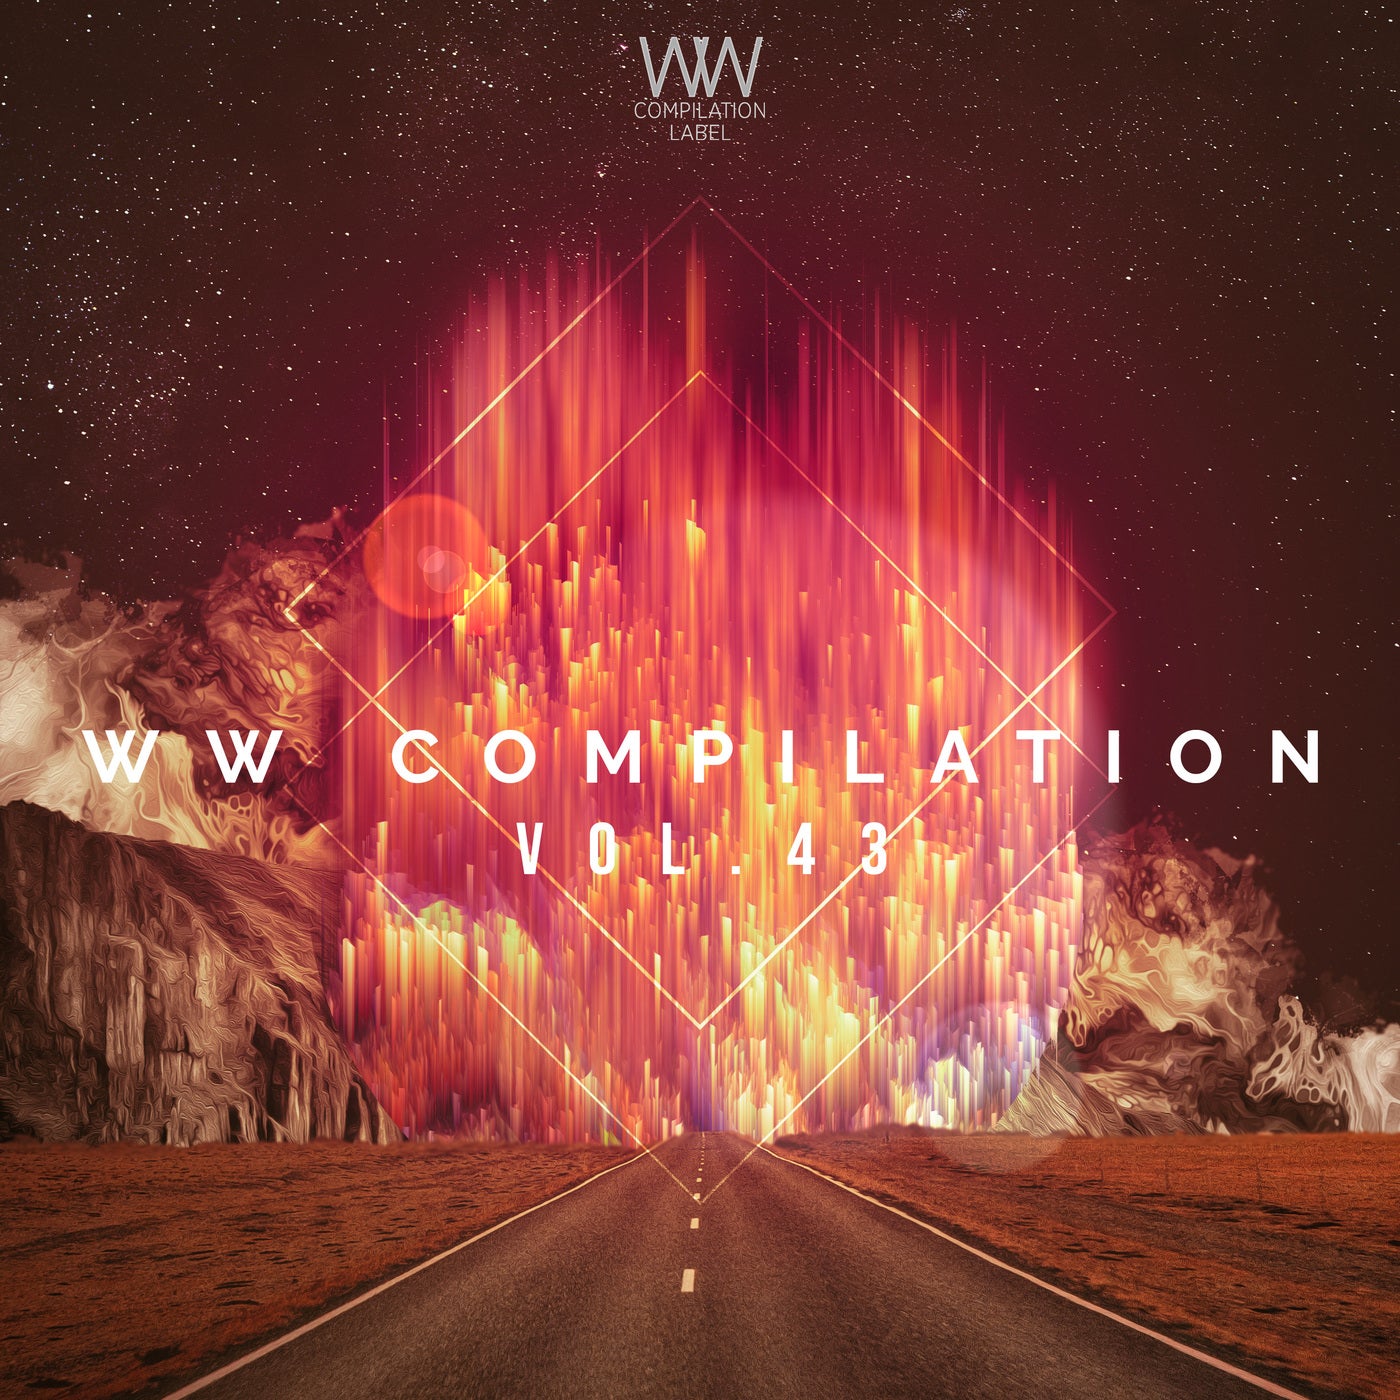 Ww Compilation, Vol. 43